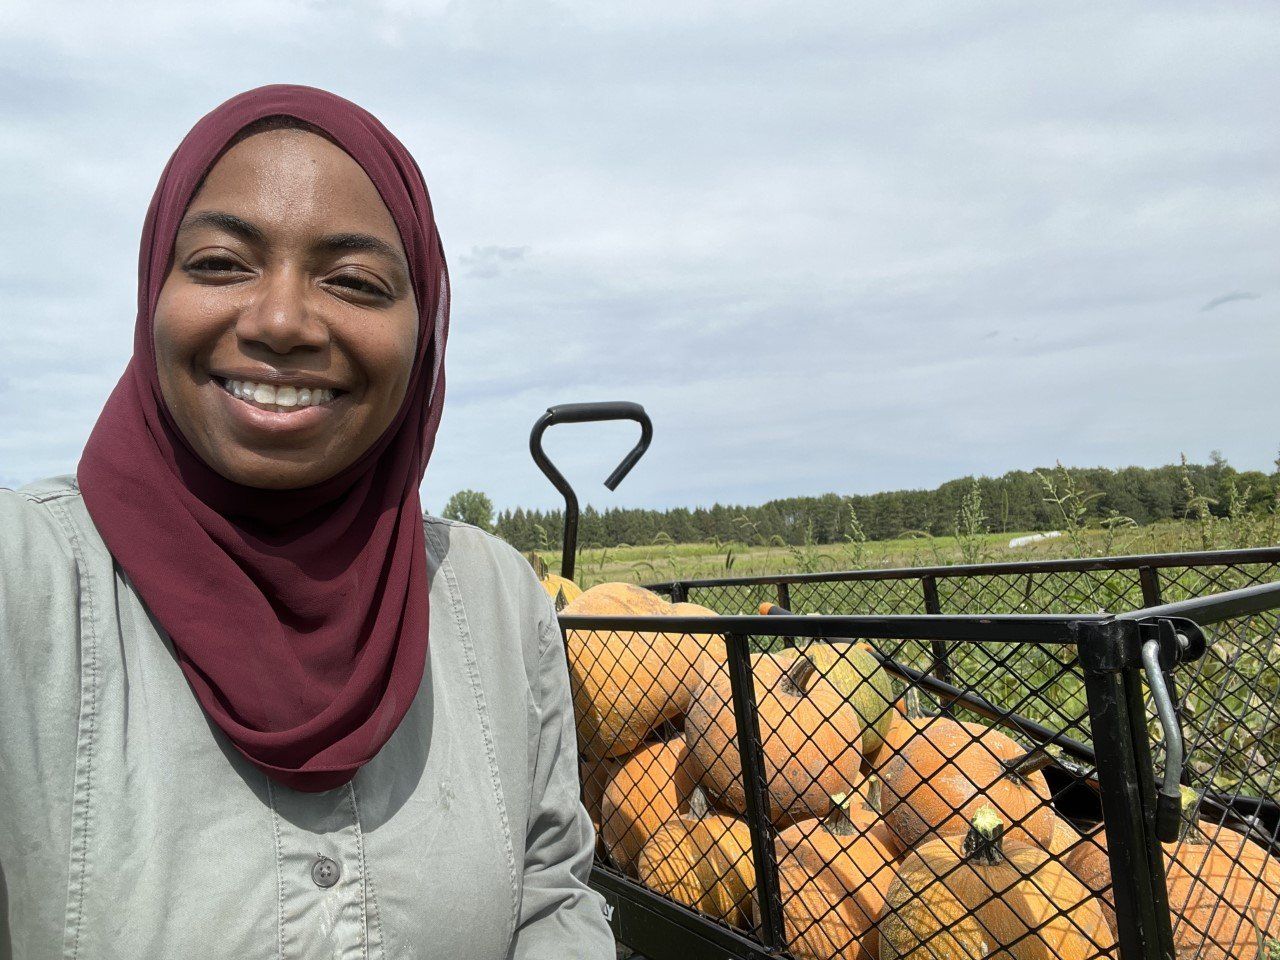 Next Happening: Meet BRF Farmer Whitney of Asfora Farm